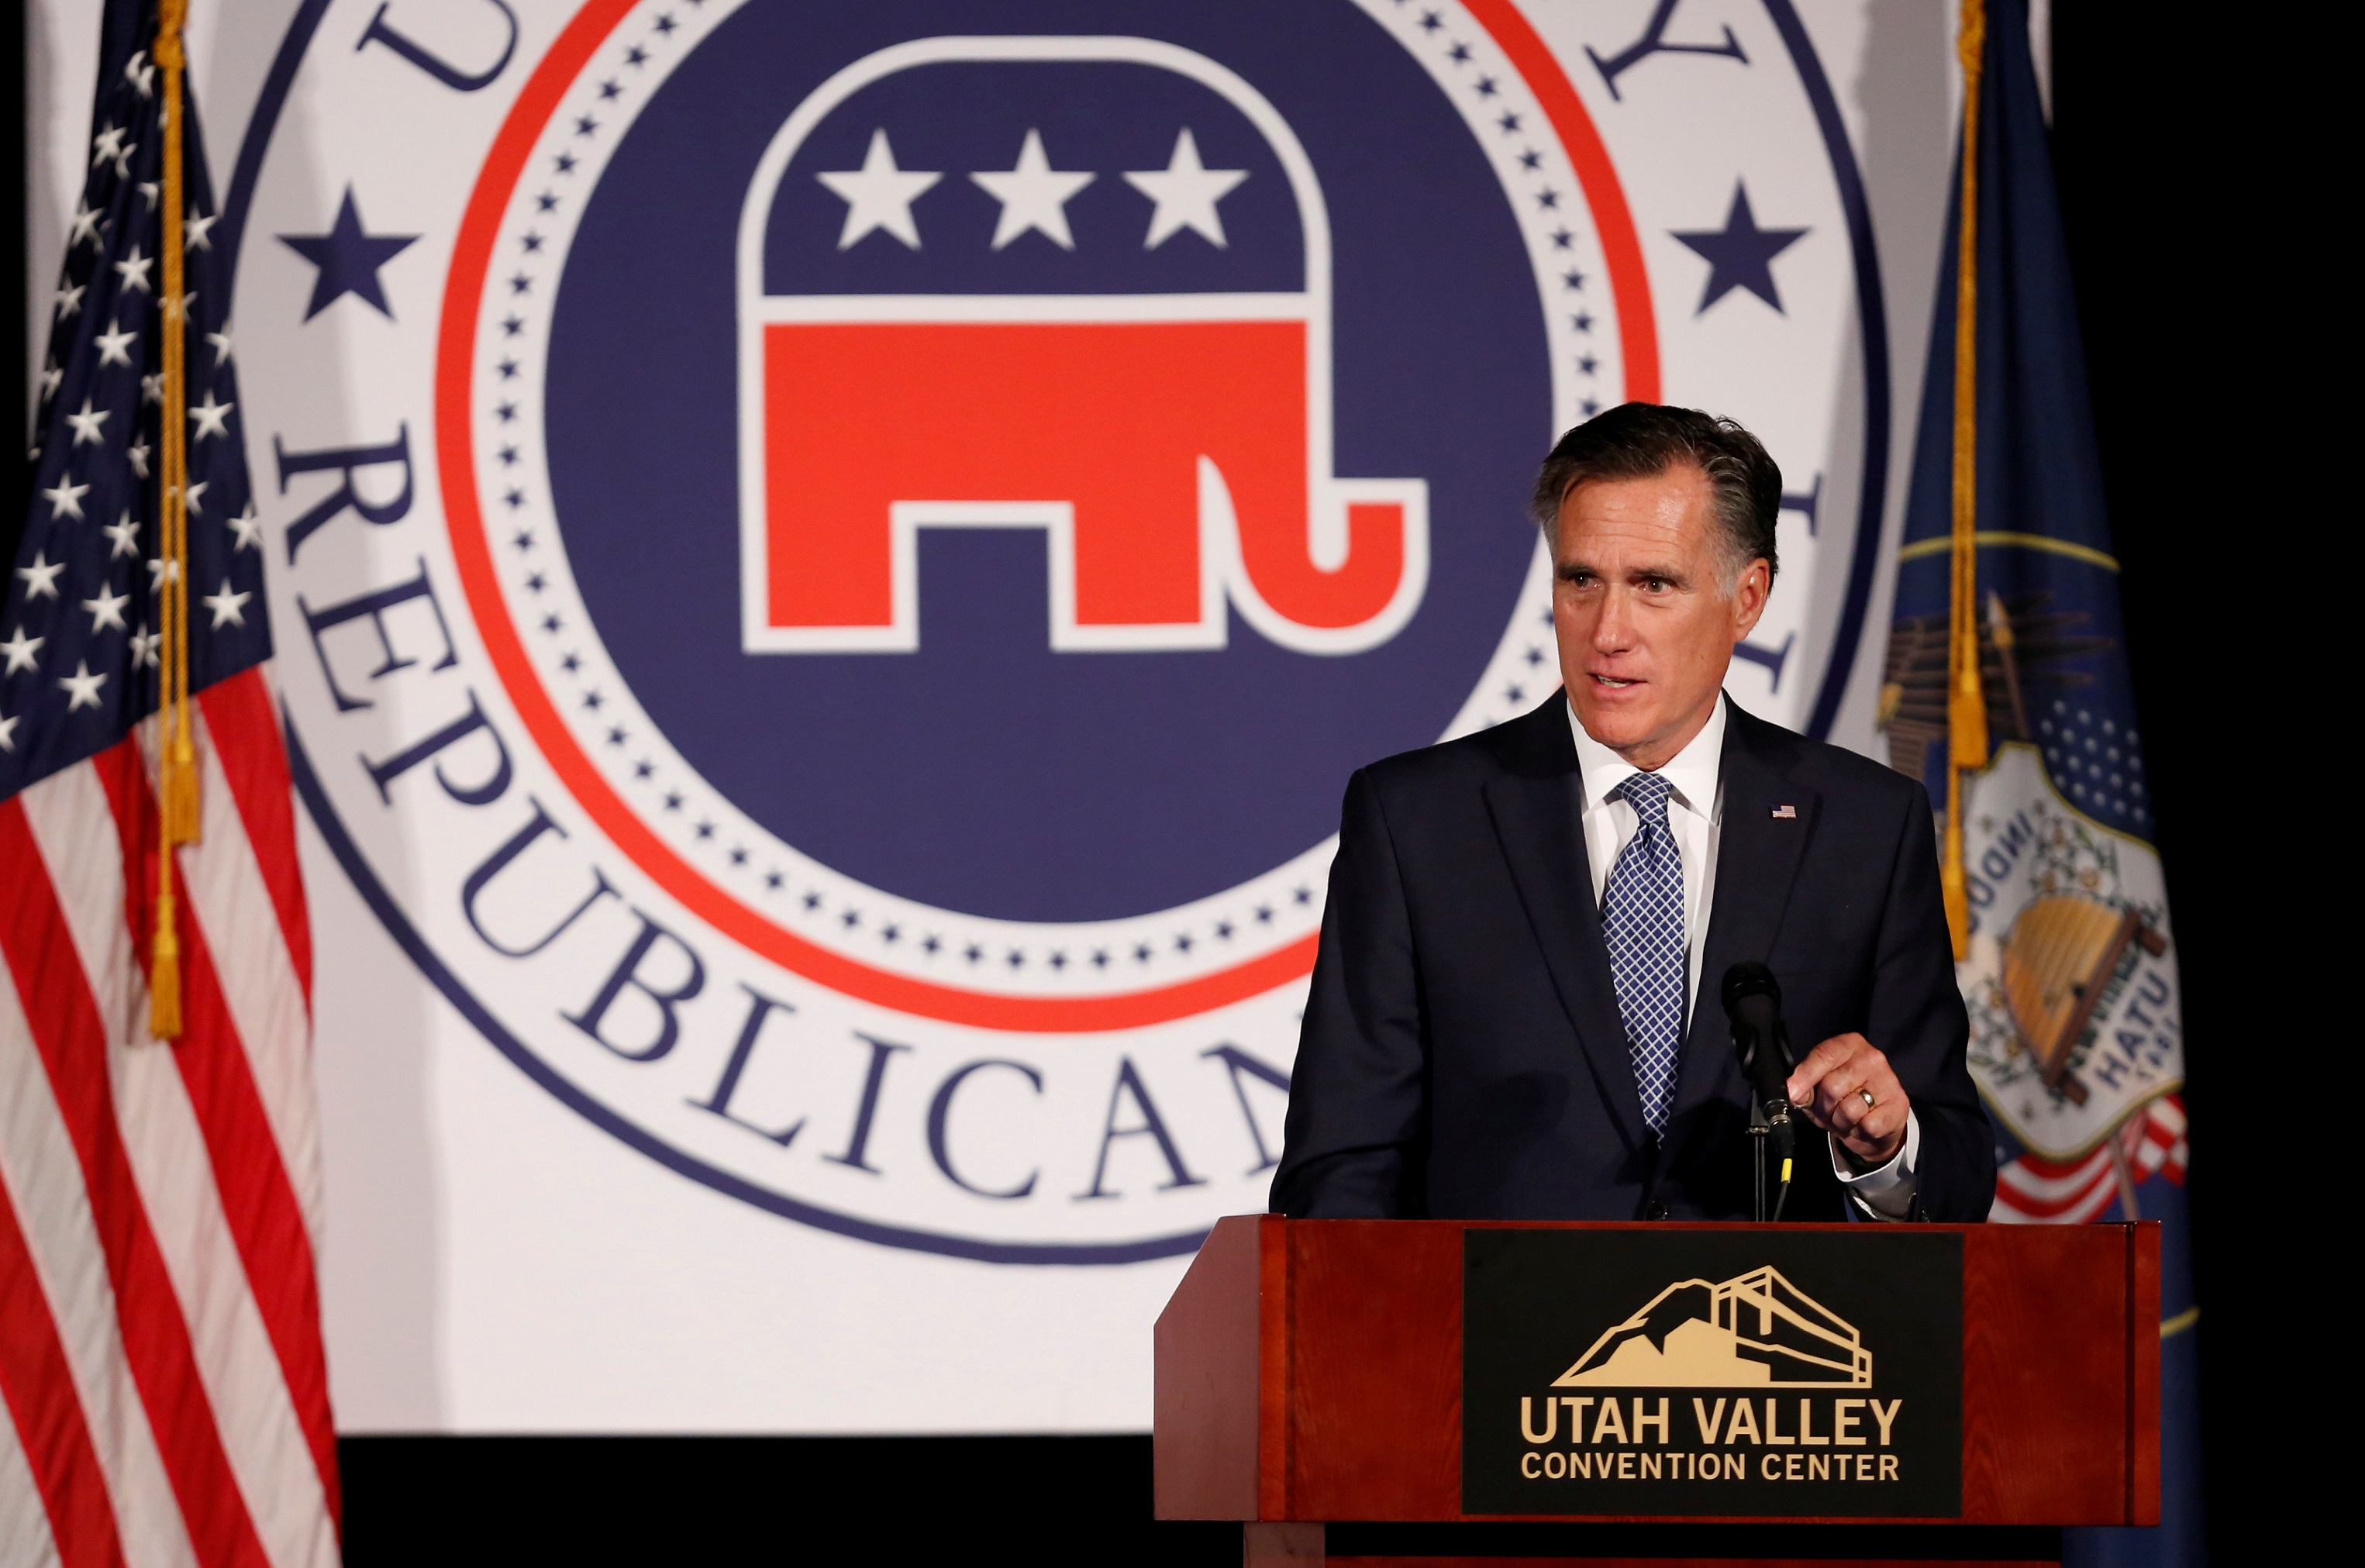 Former U.S. presidential candidate Mitt Romney speaks at the Utah County Republican Party Lincoln Day Dinner, in Provo, Utah, U.S. February 16, 2018. REUTERS/Jim Urquhart - RC148EDEE130